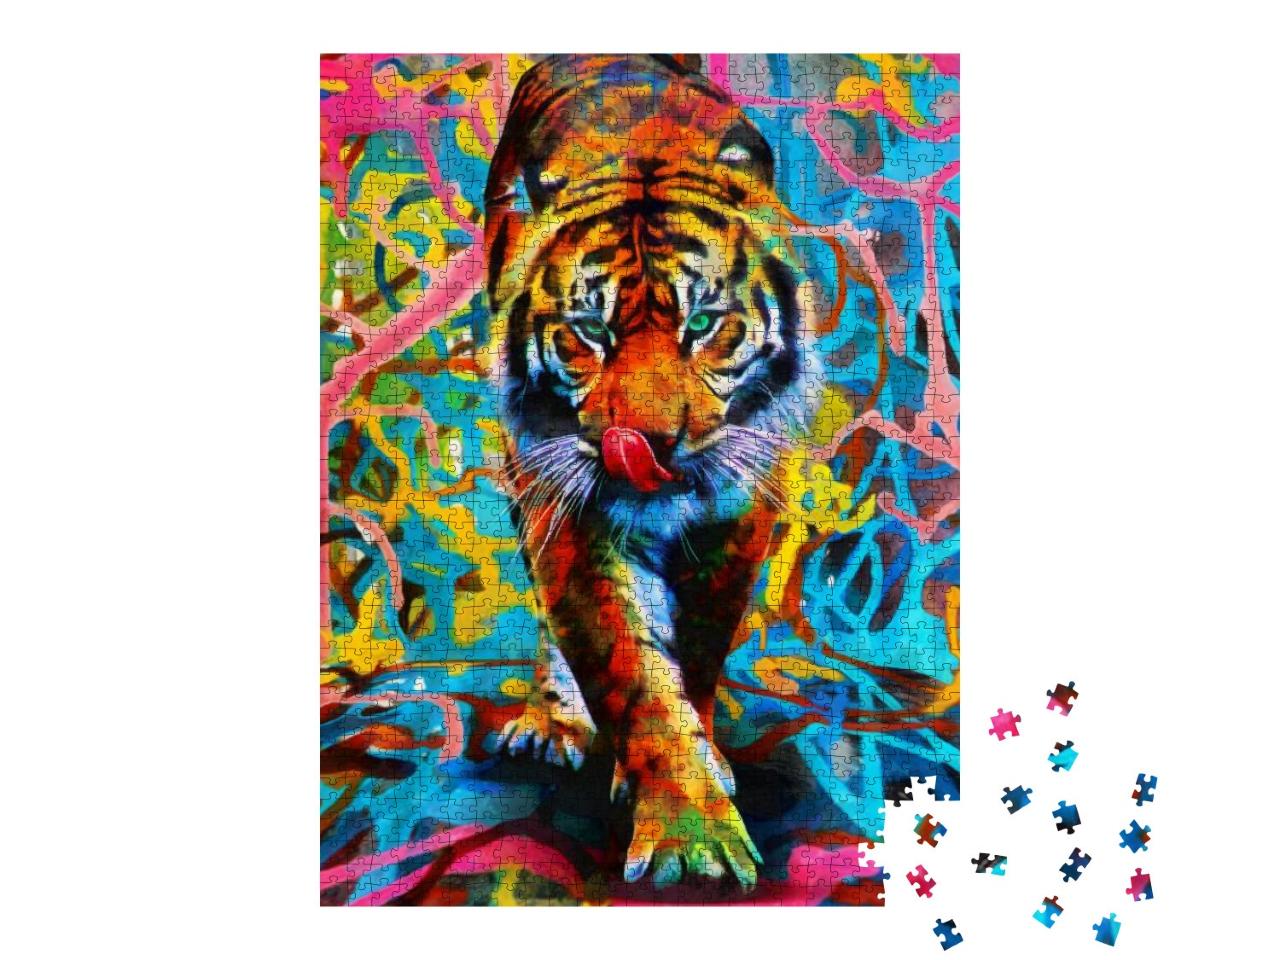 Puzzle 1000 Teile „modernes Ölgemälde: Tiger in bunten Farben“